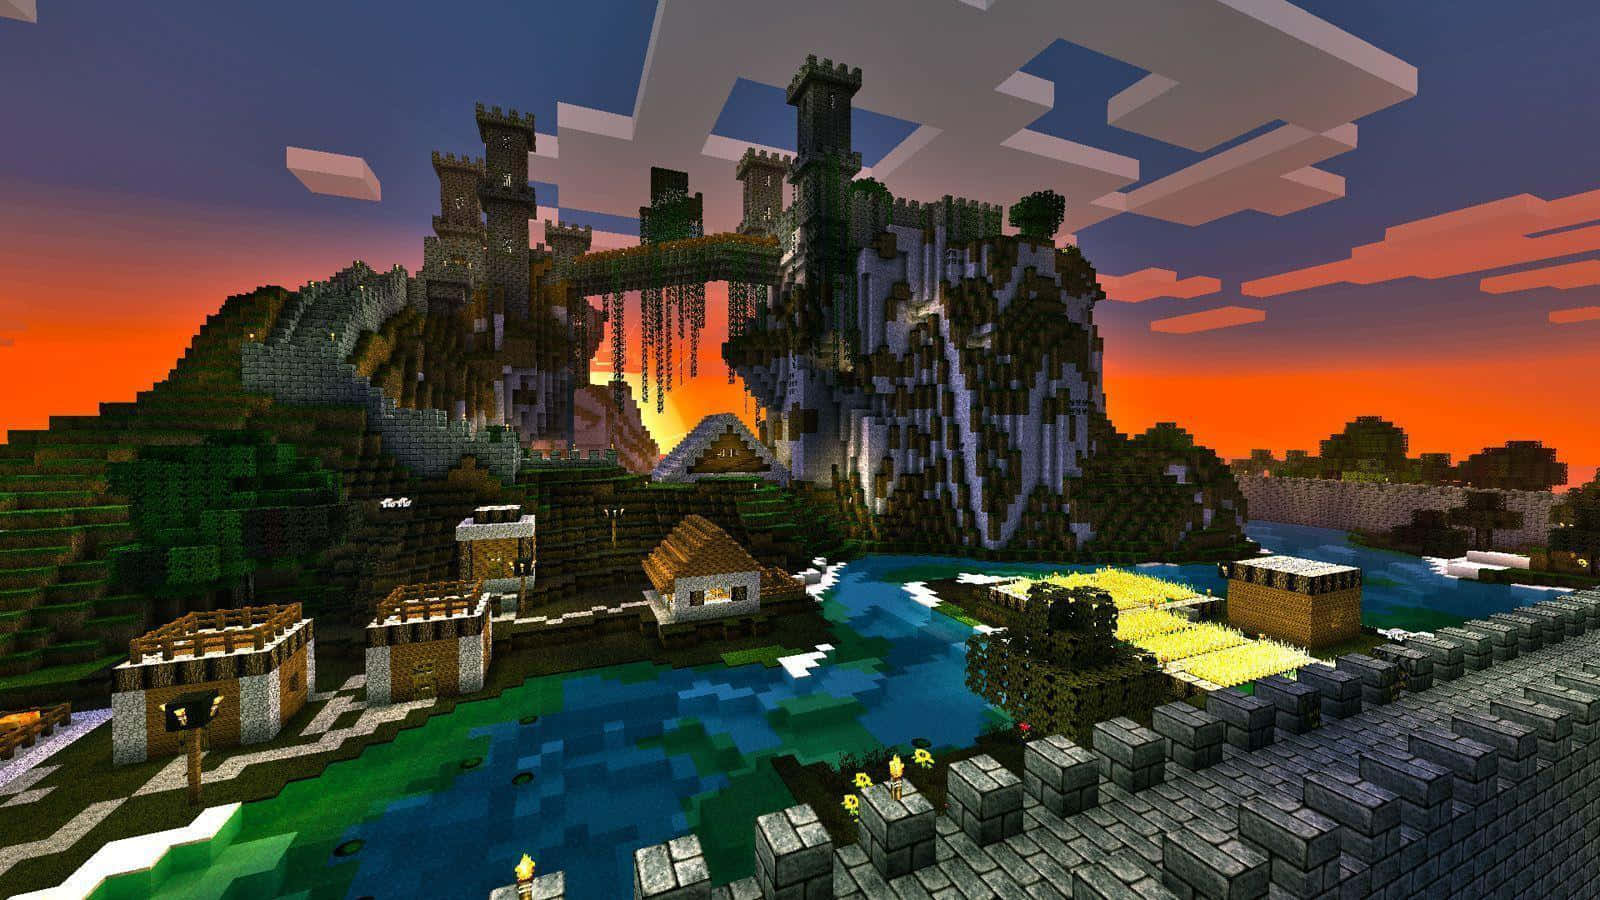 A stunning view of an intricately-built modern Minecraft house